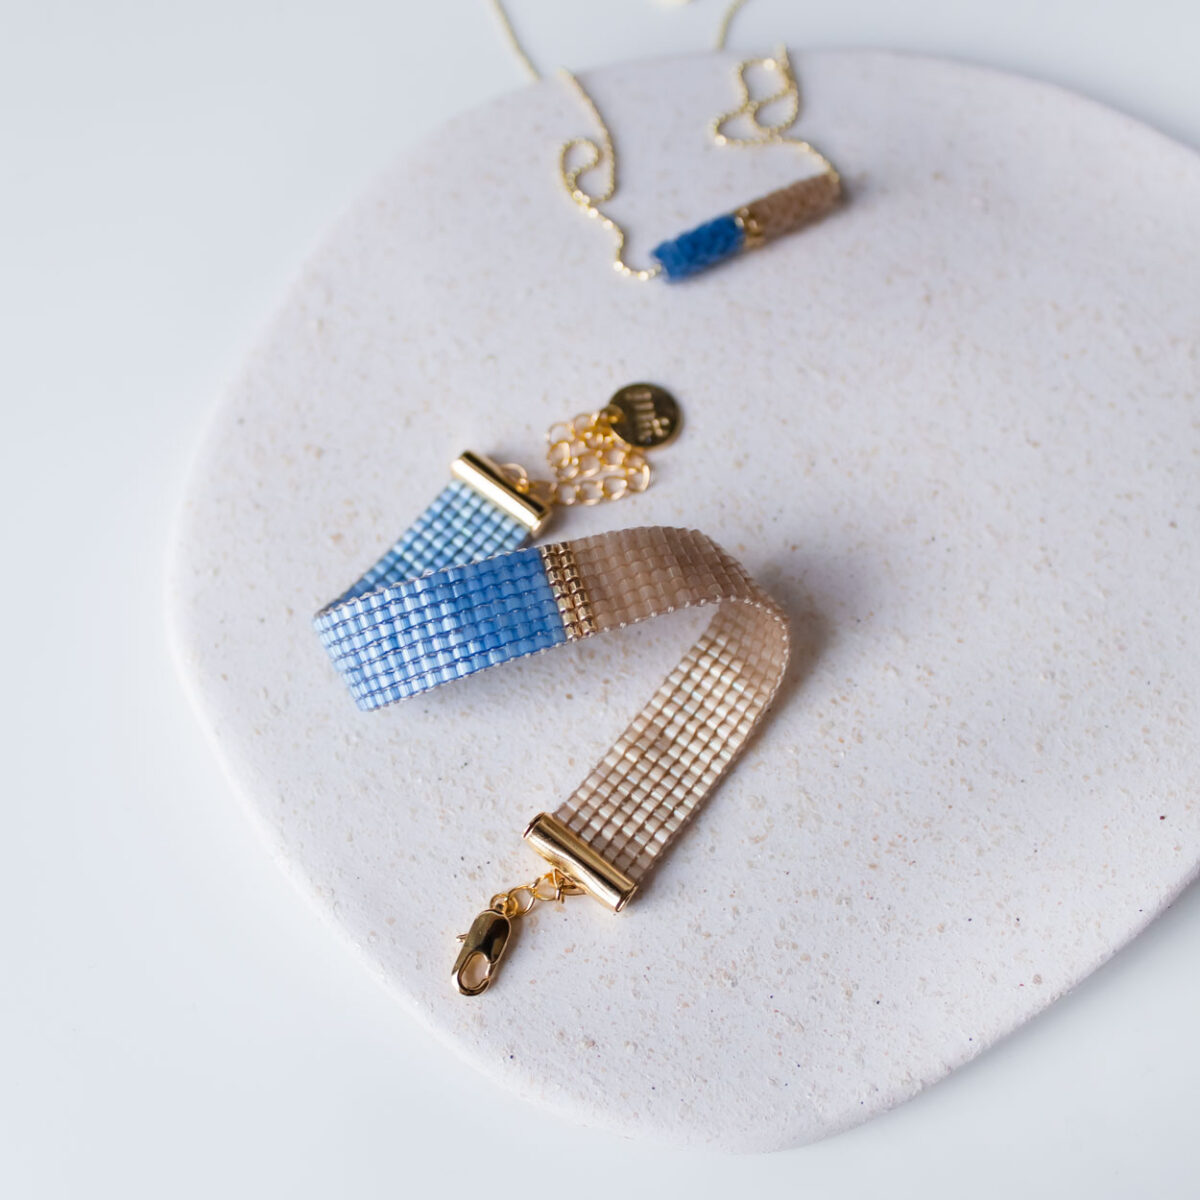 Elegant blue-beige bracelet and necklace displayed on a white ceramic plate.